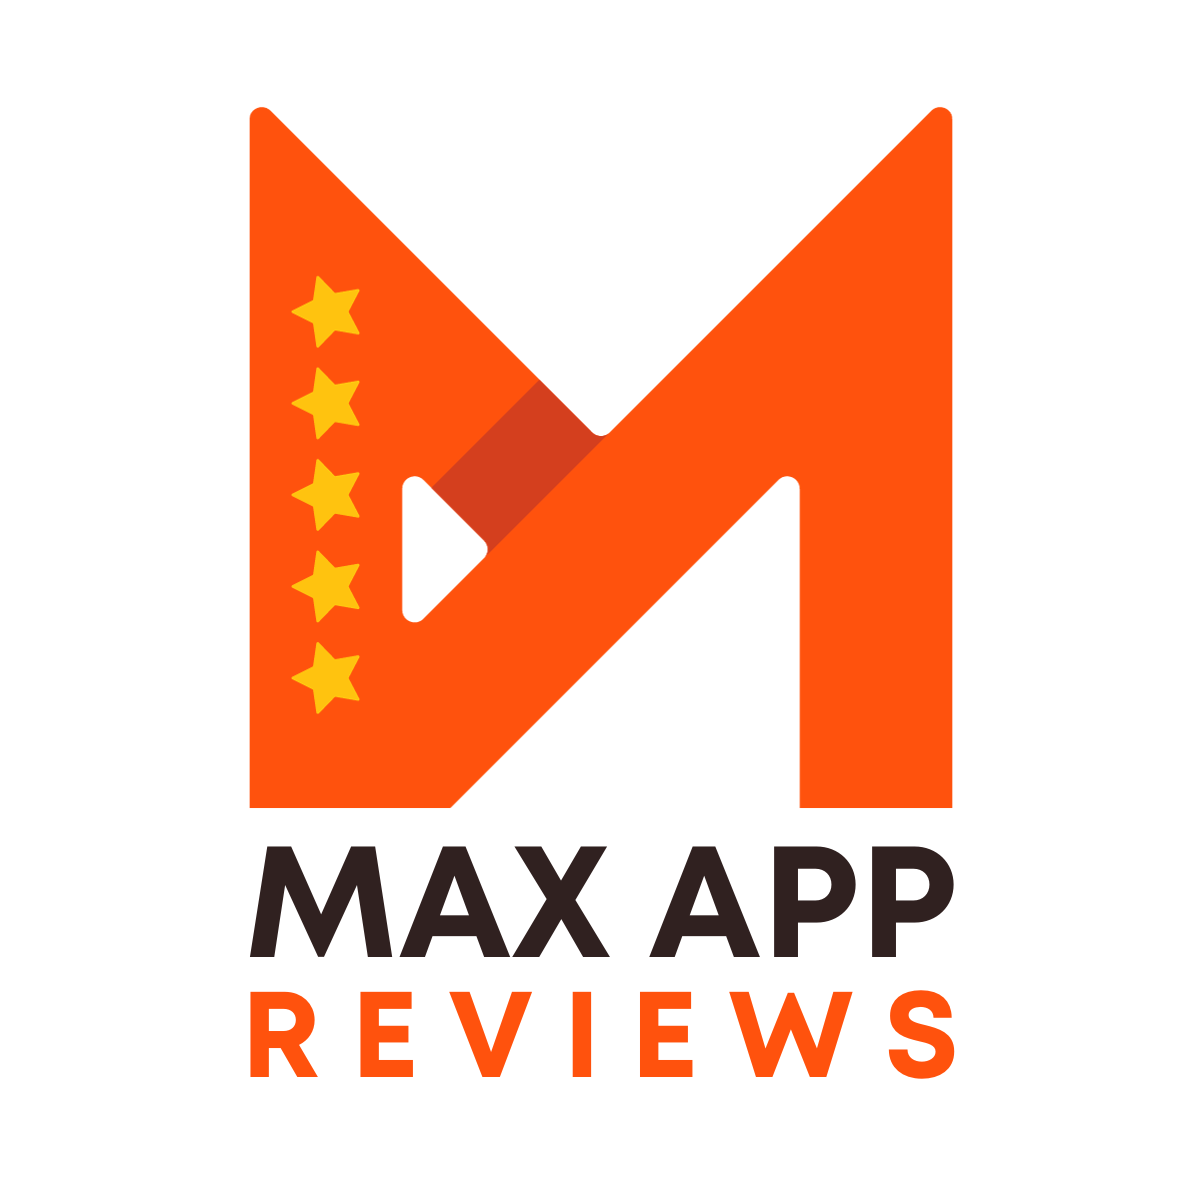 Max App Reviews